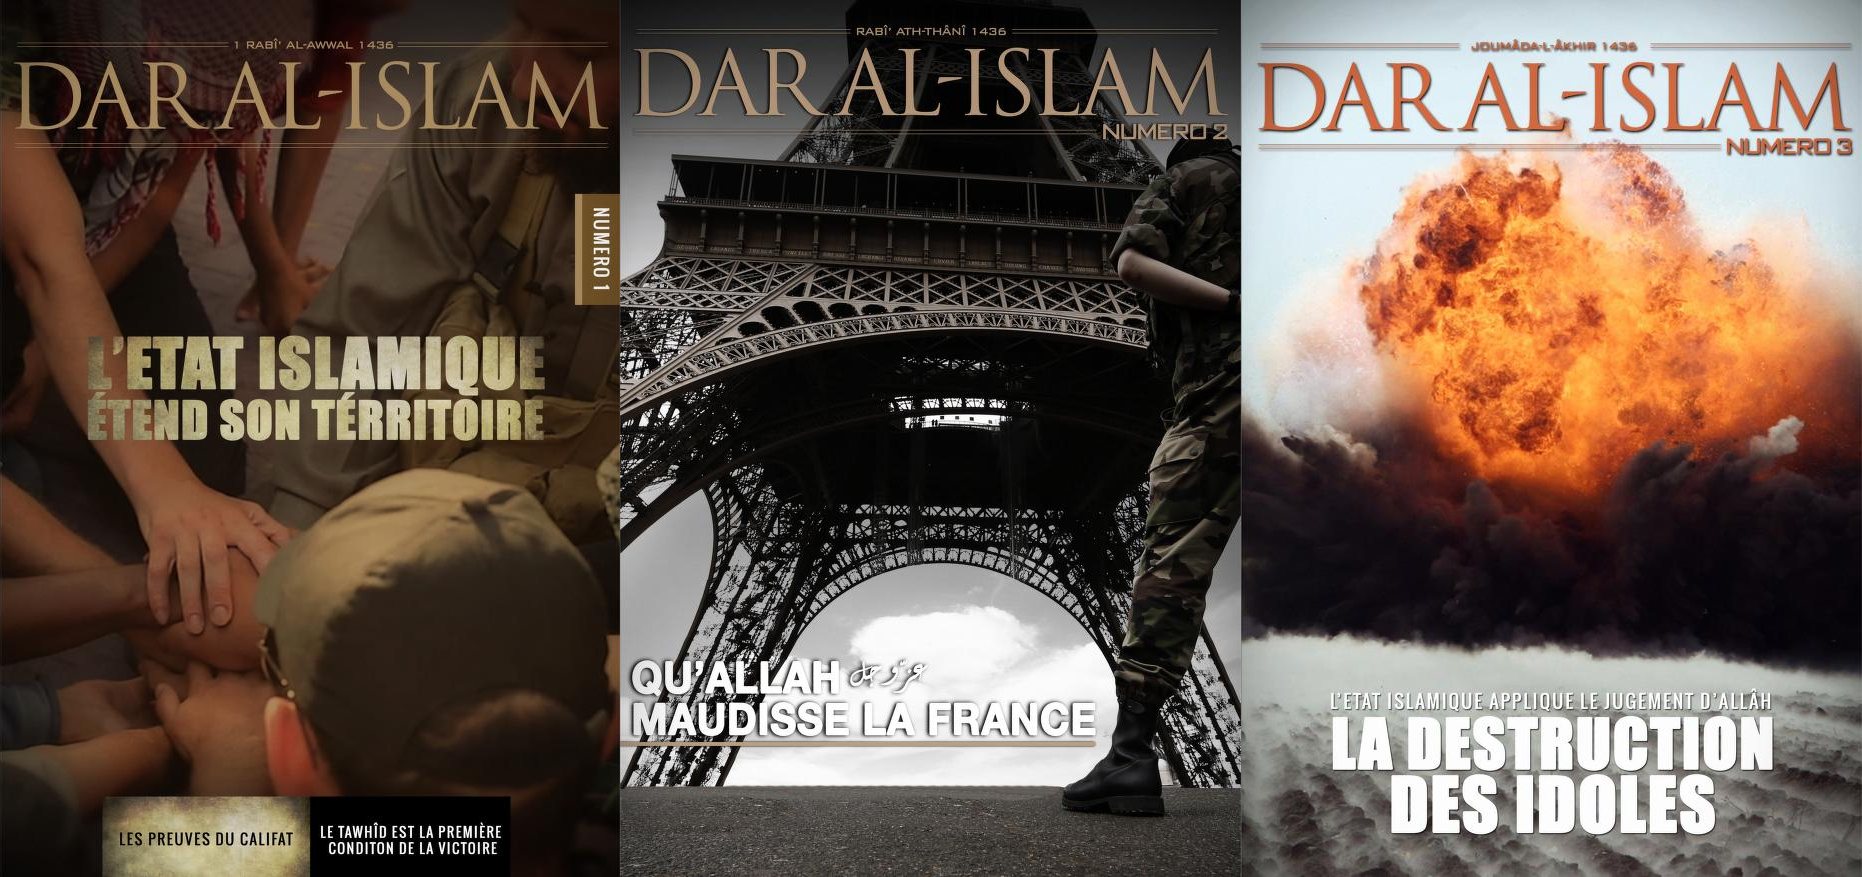 Dar Al-Islam – Propaganda for the Caliphate